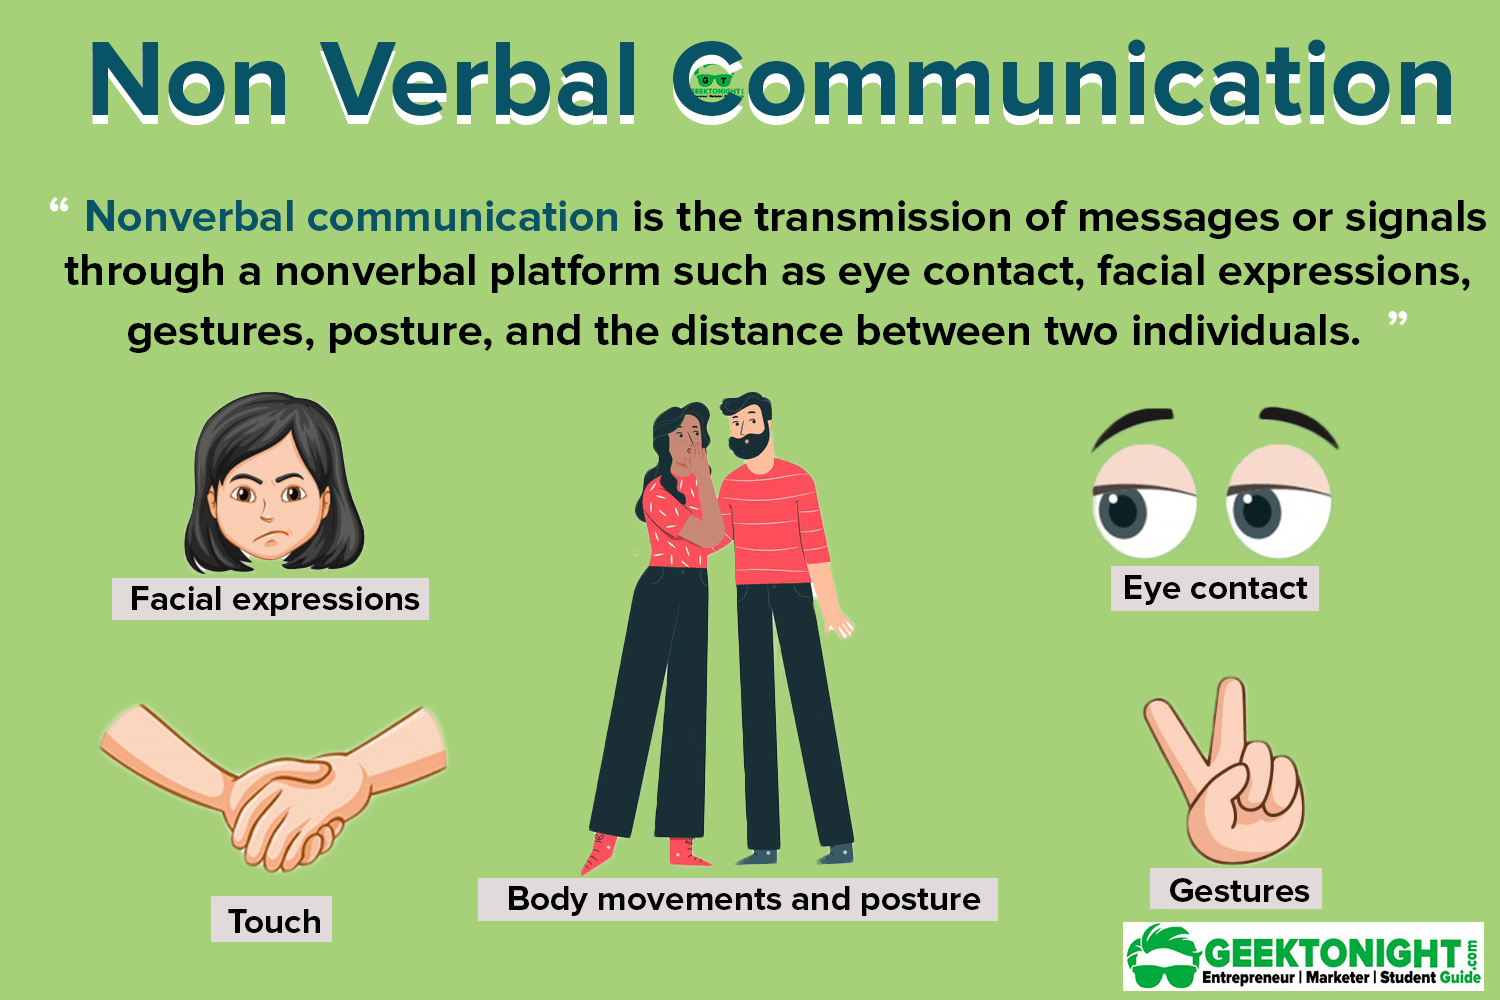 body language gestures and postures